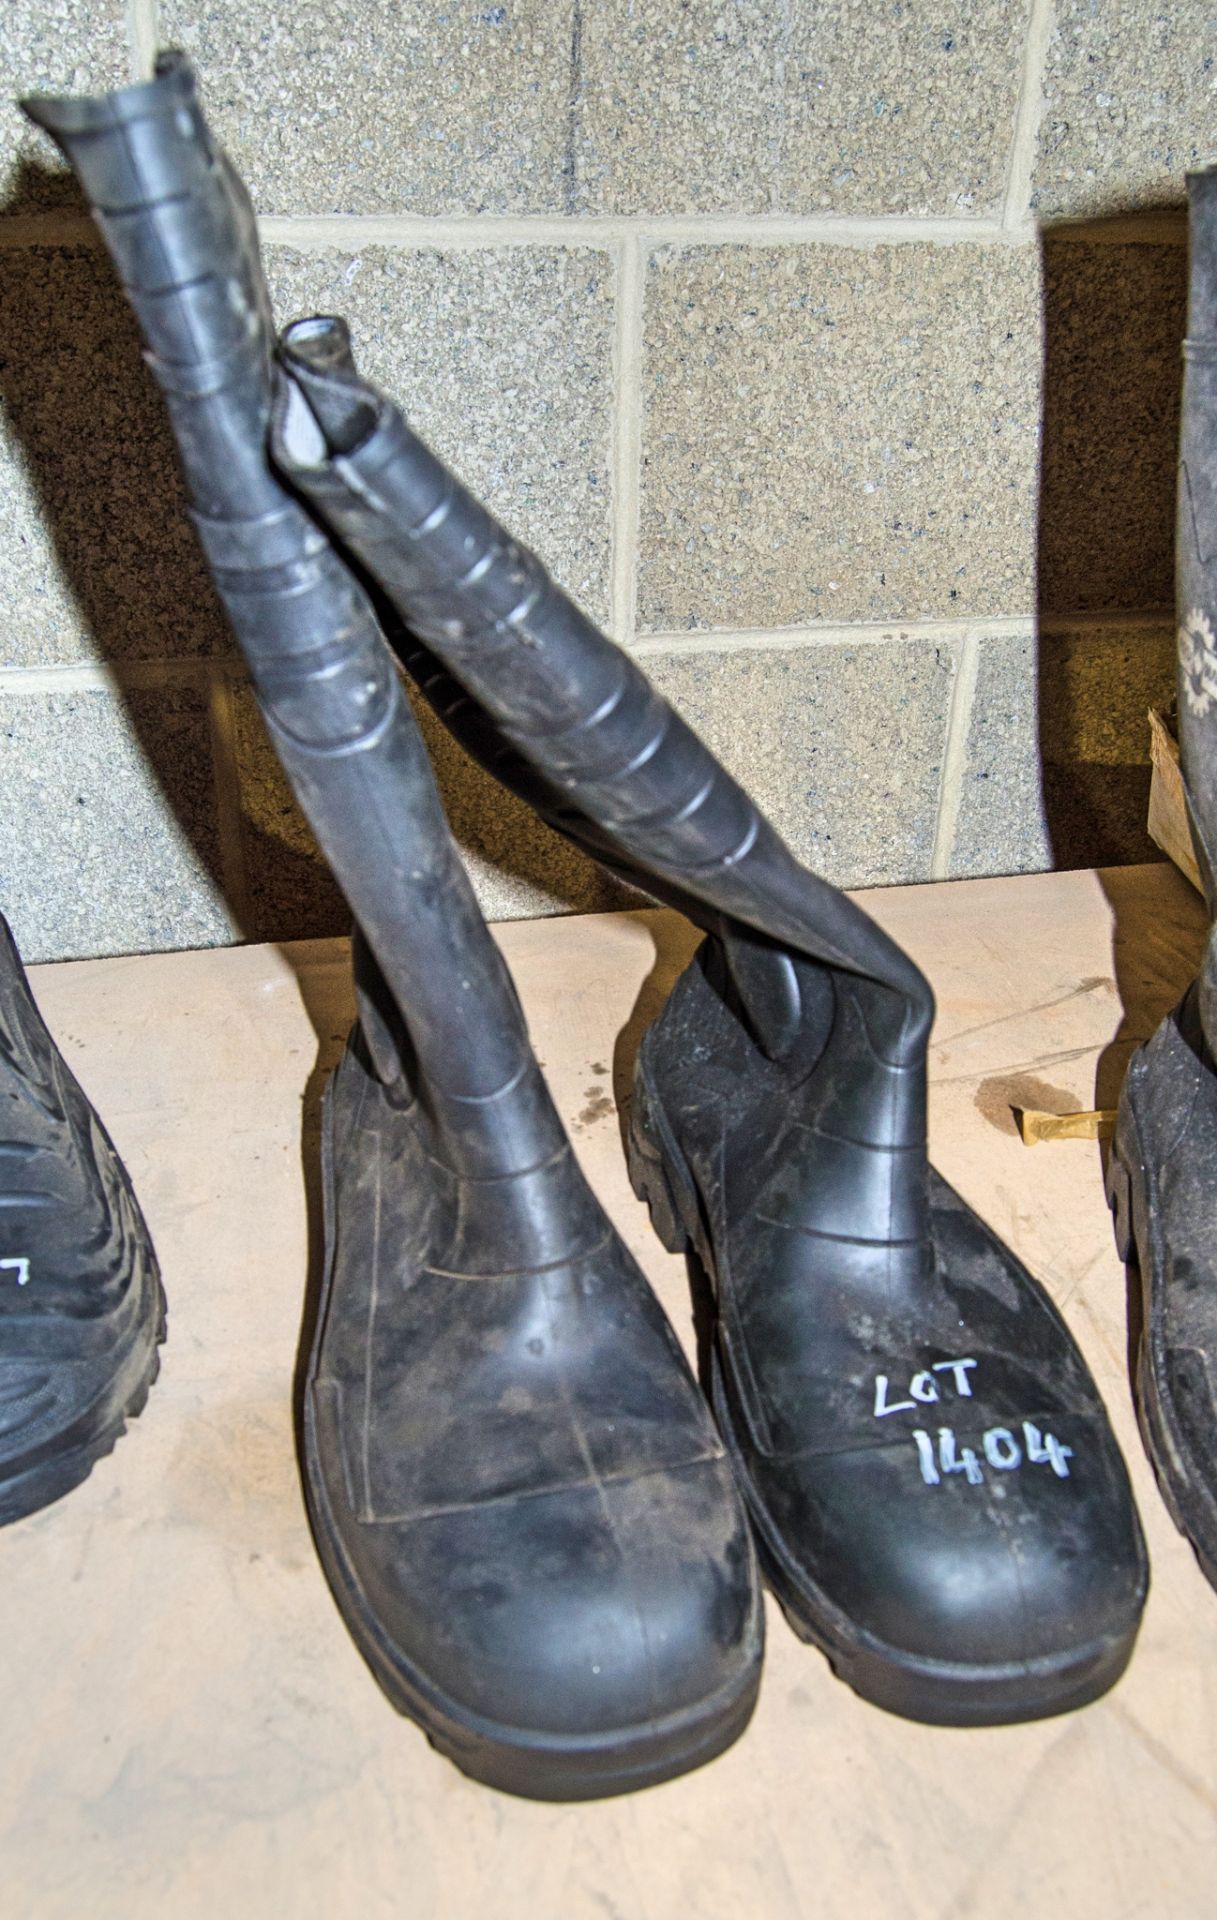 Pair of size 8 Tomcat steel toe cap wellington boots